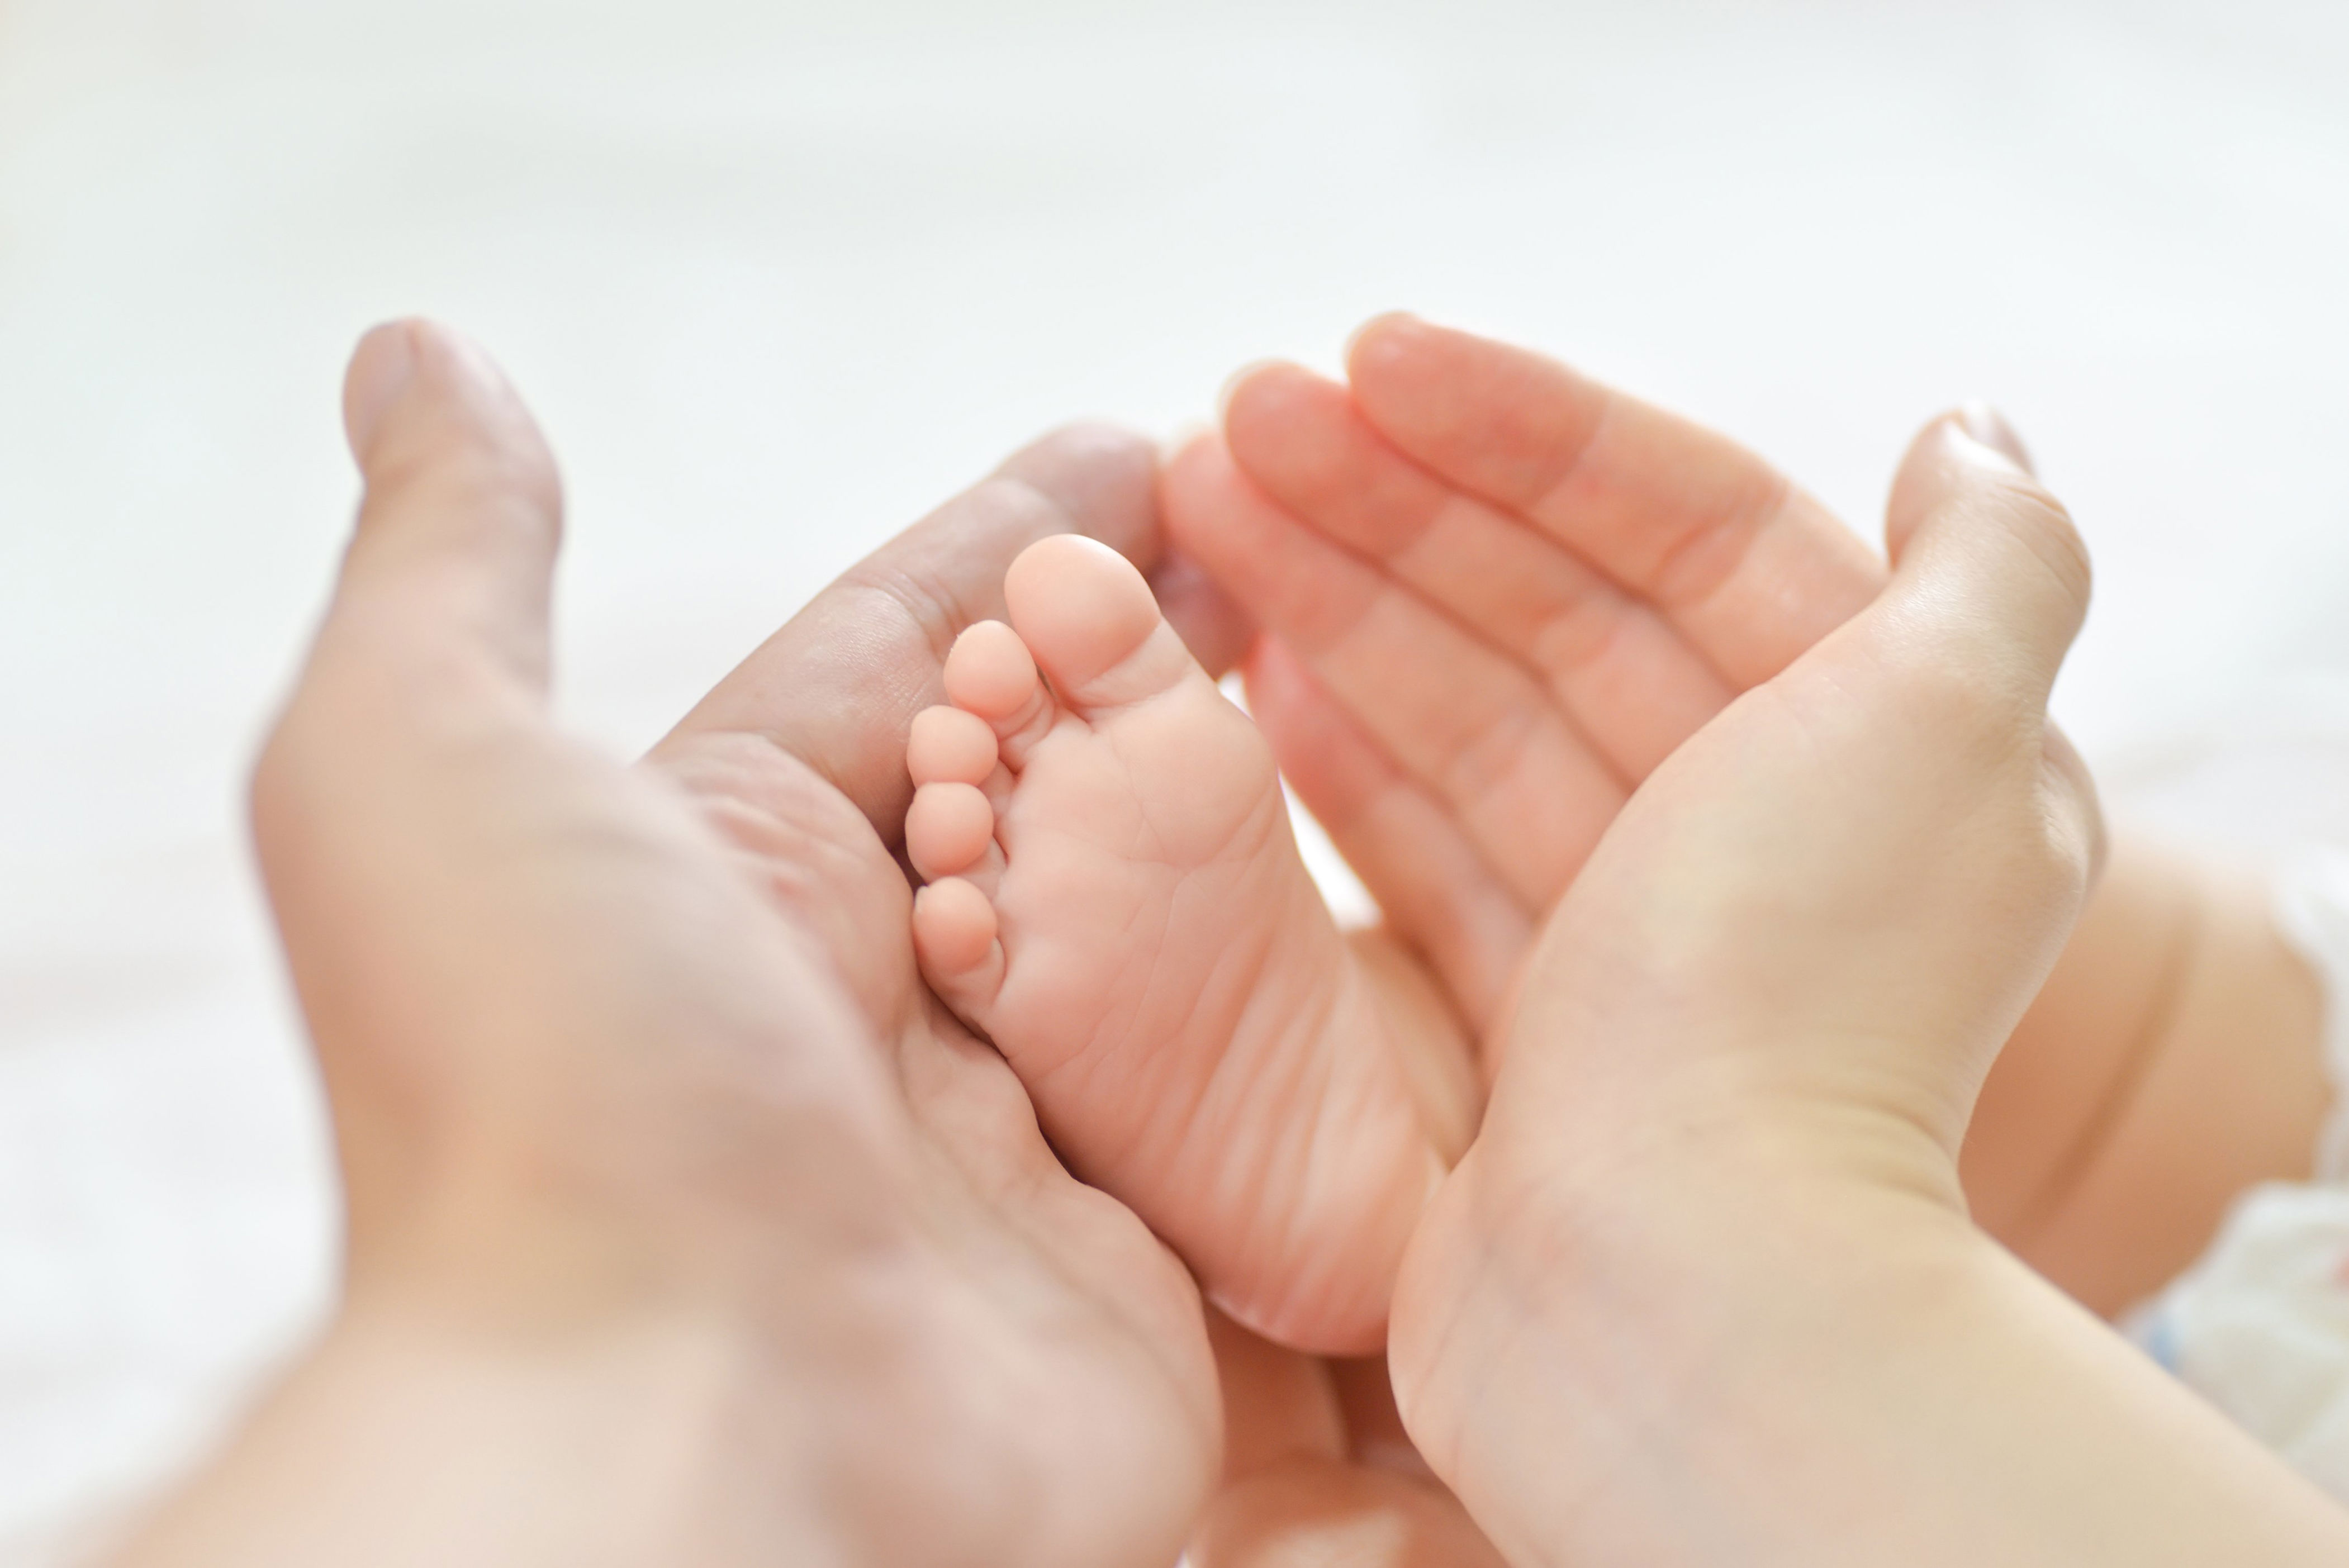 Руки и ноги коликами. Ножки младенца. Ребенок на руках. Детская ножка в руках. Маленькие ножки.